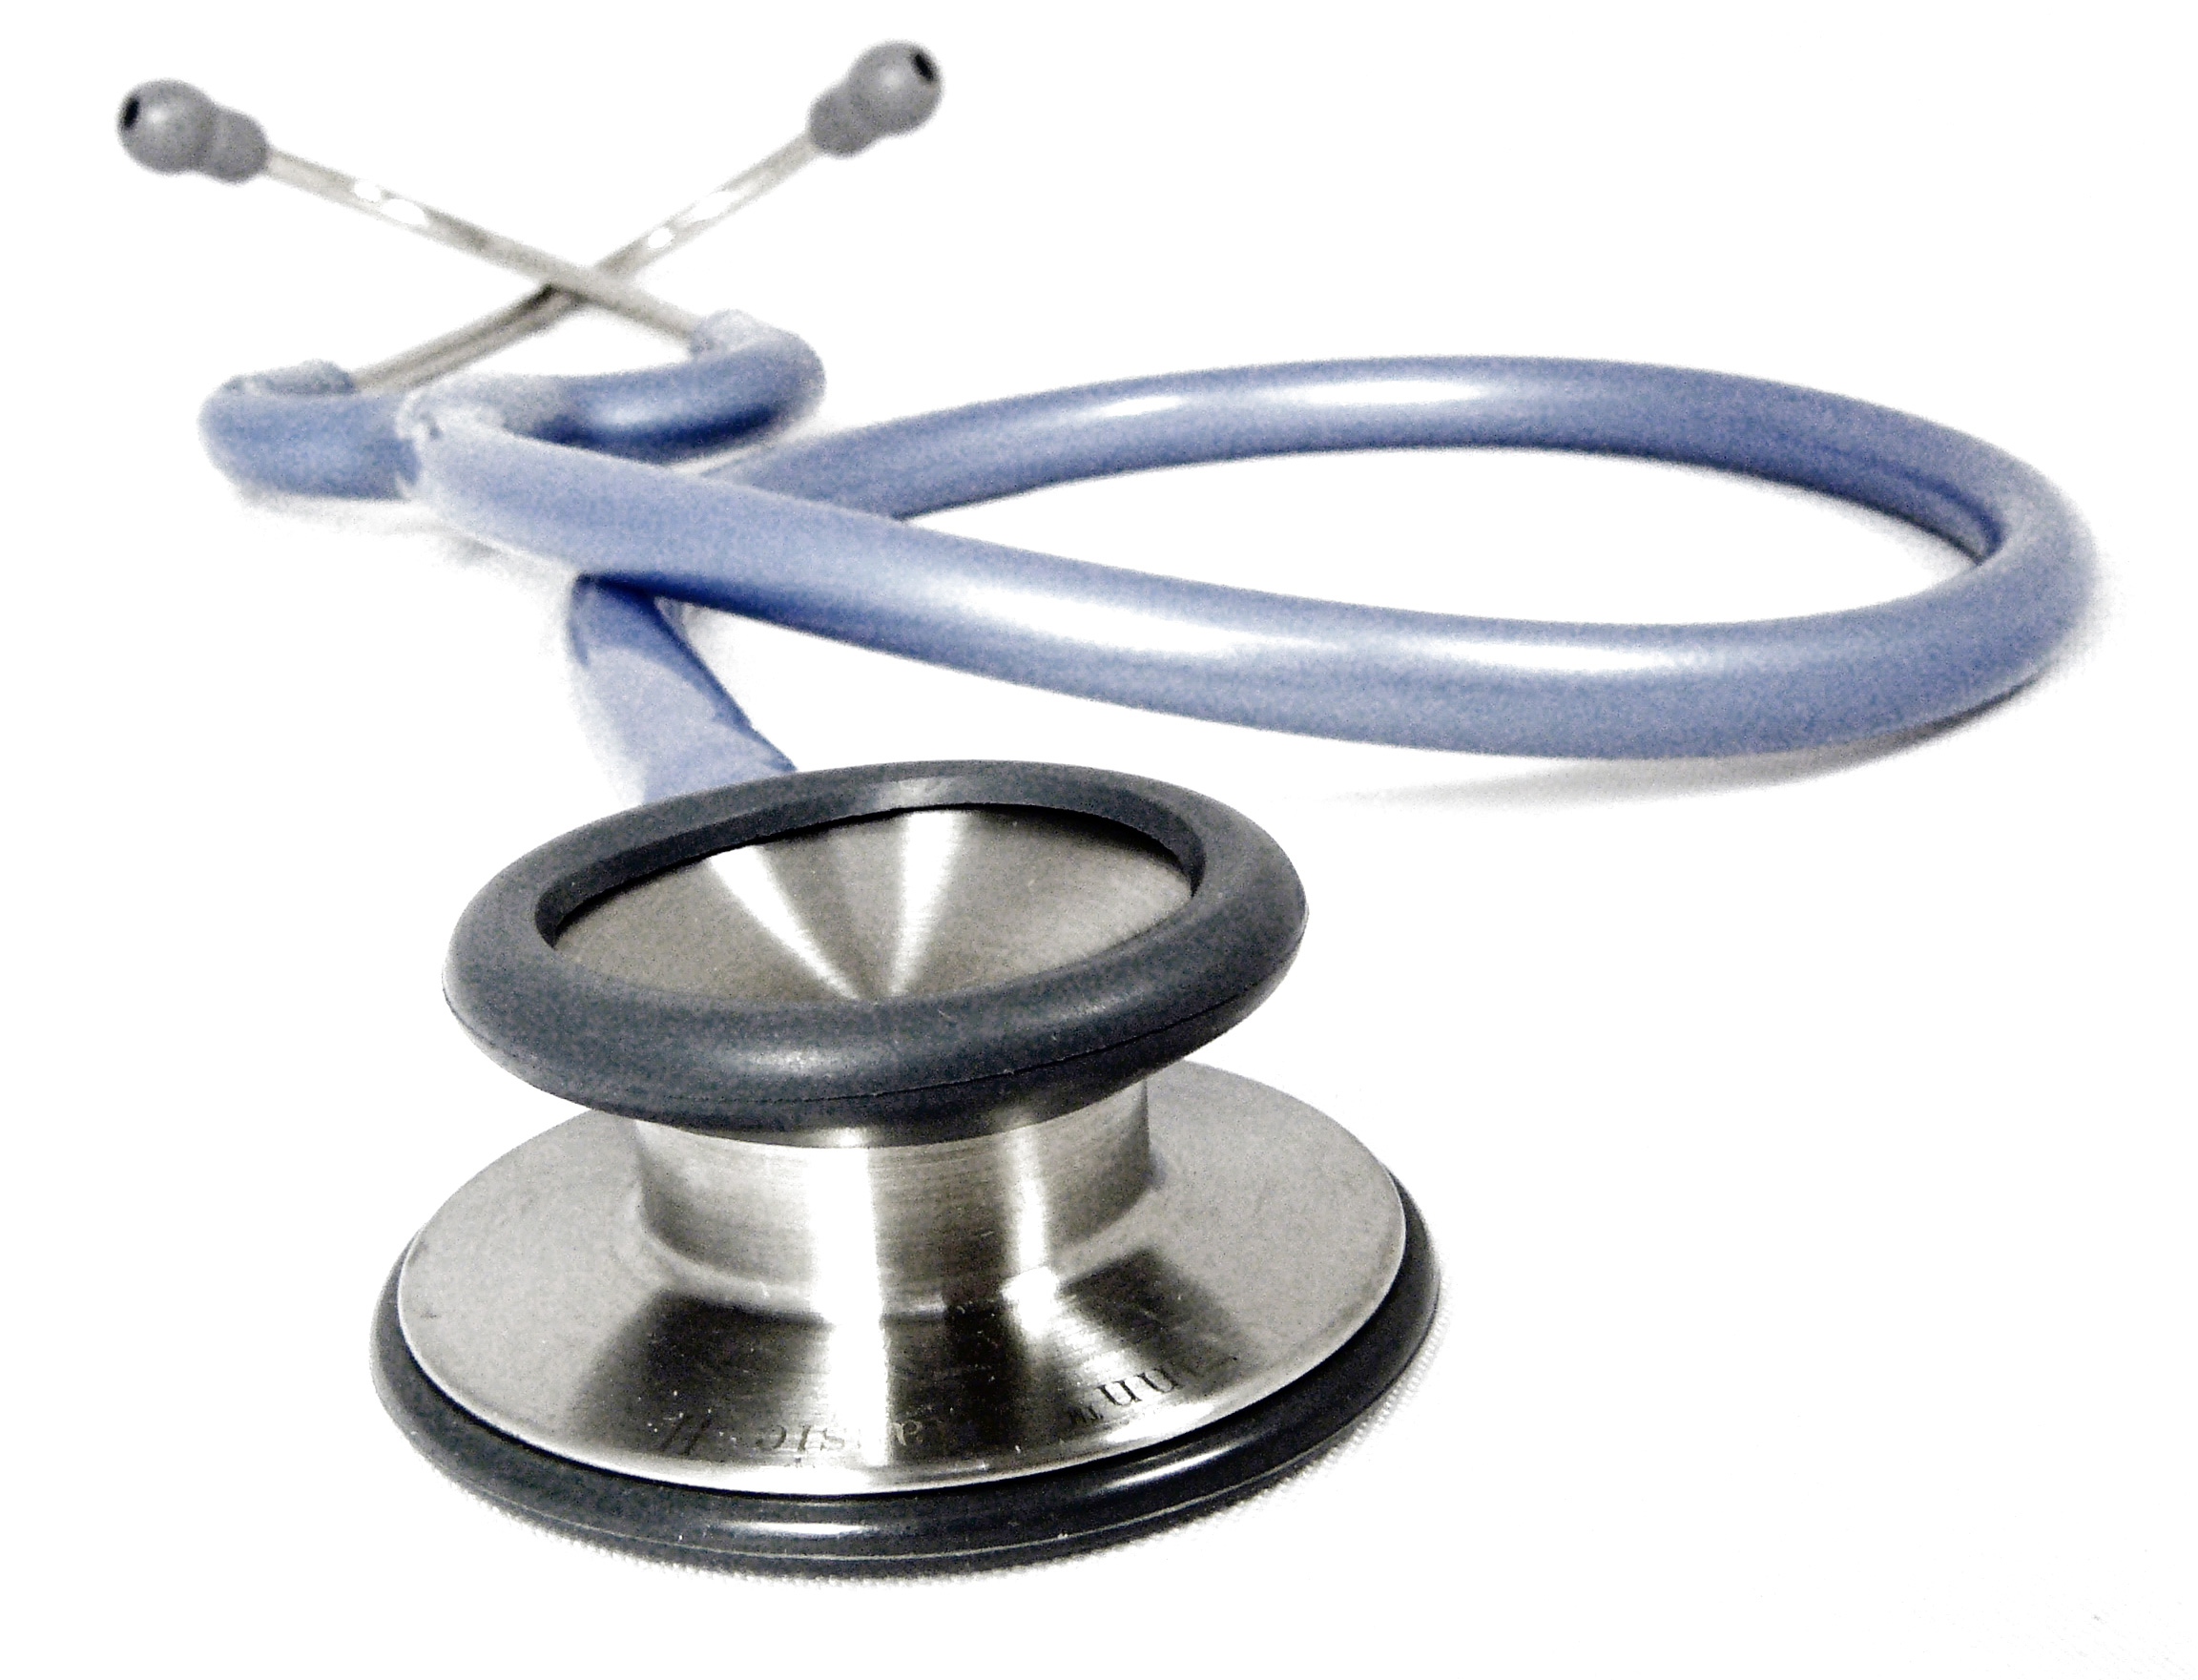 File:Doctors stethoscope 1.jpg - Wikimedia Commons